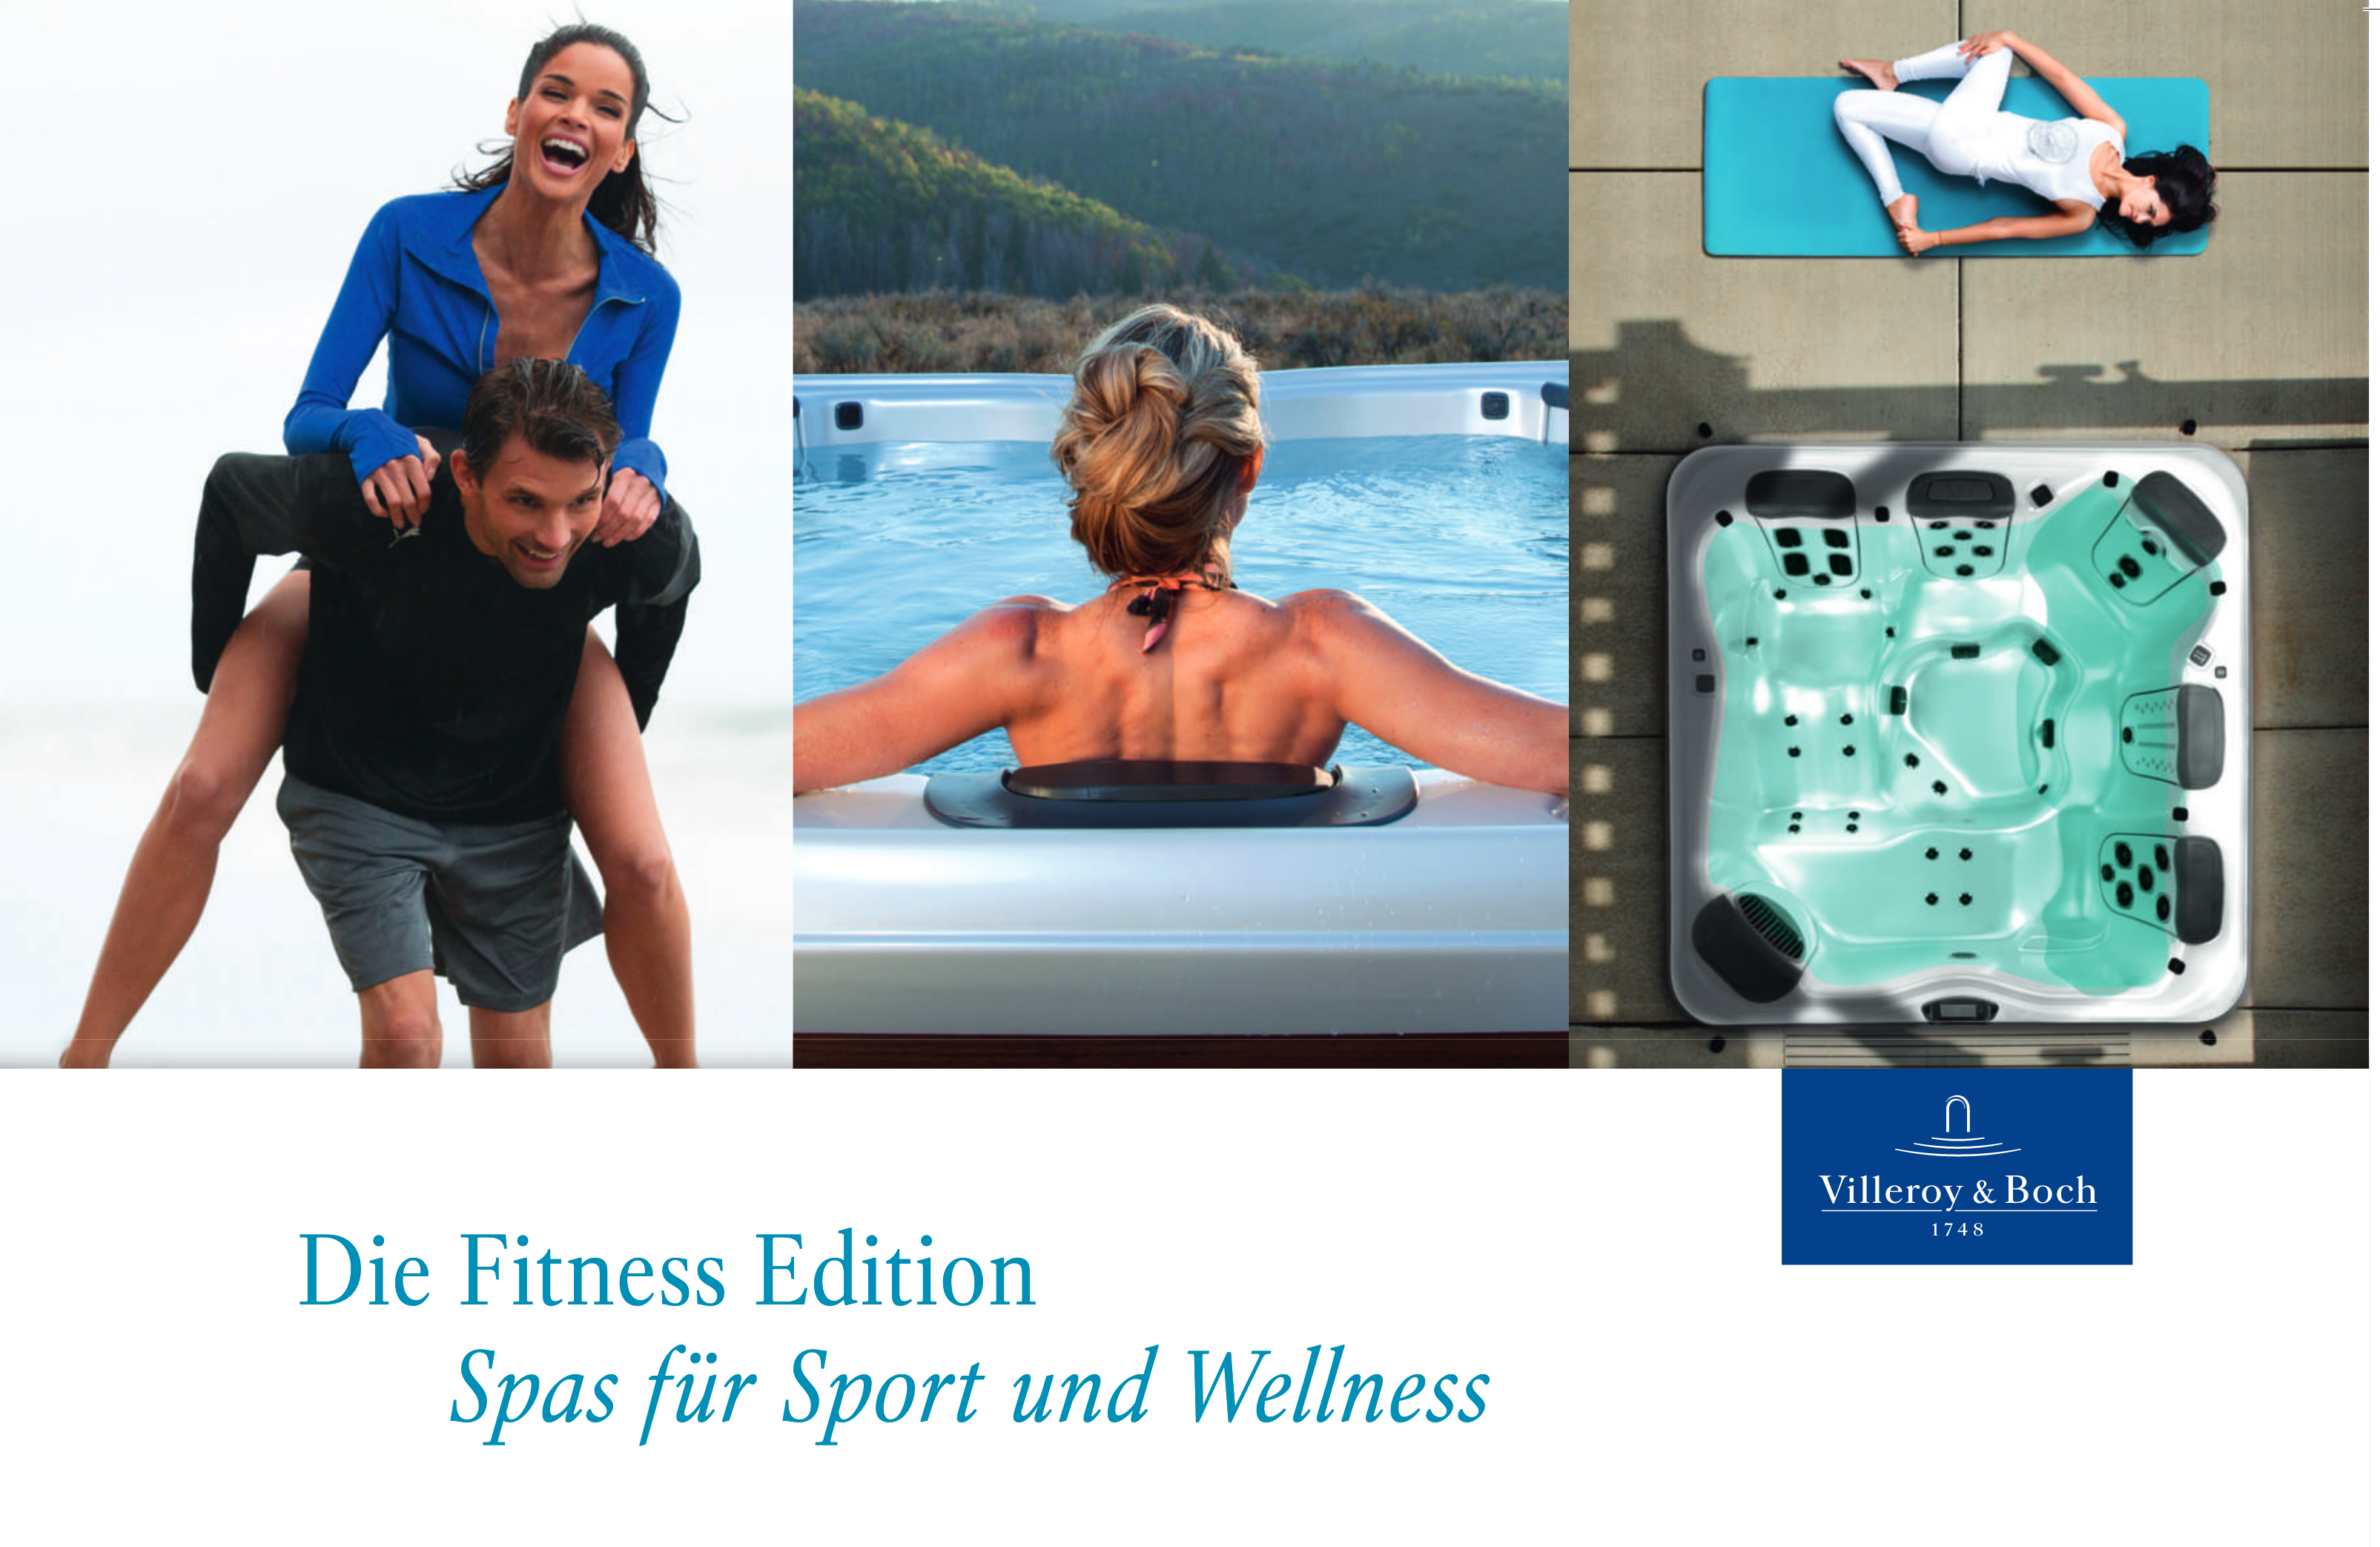 https://www.villeroy-boch.de/fileadmin/upload/facelift2014/Bad_und_Wellness/Whirlpool/Outdoor_Whirlpools/Produkte/fitnessEdition_Yoga1.jpg